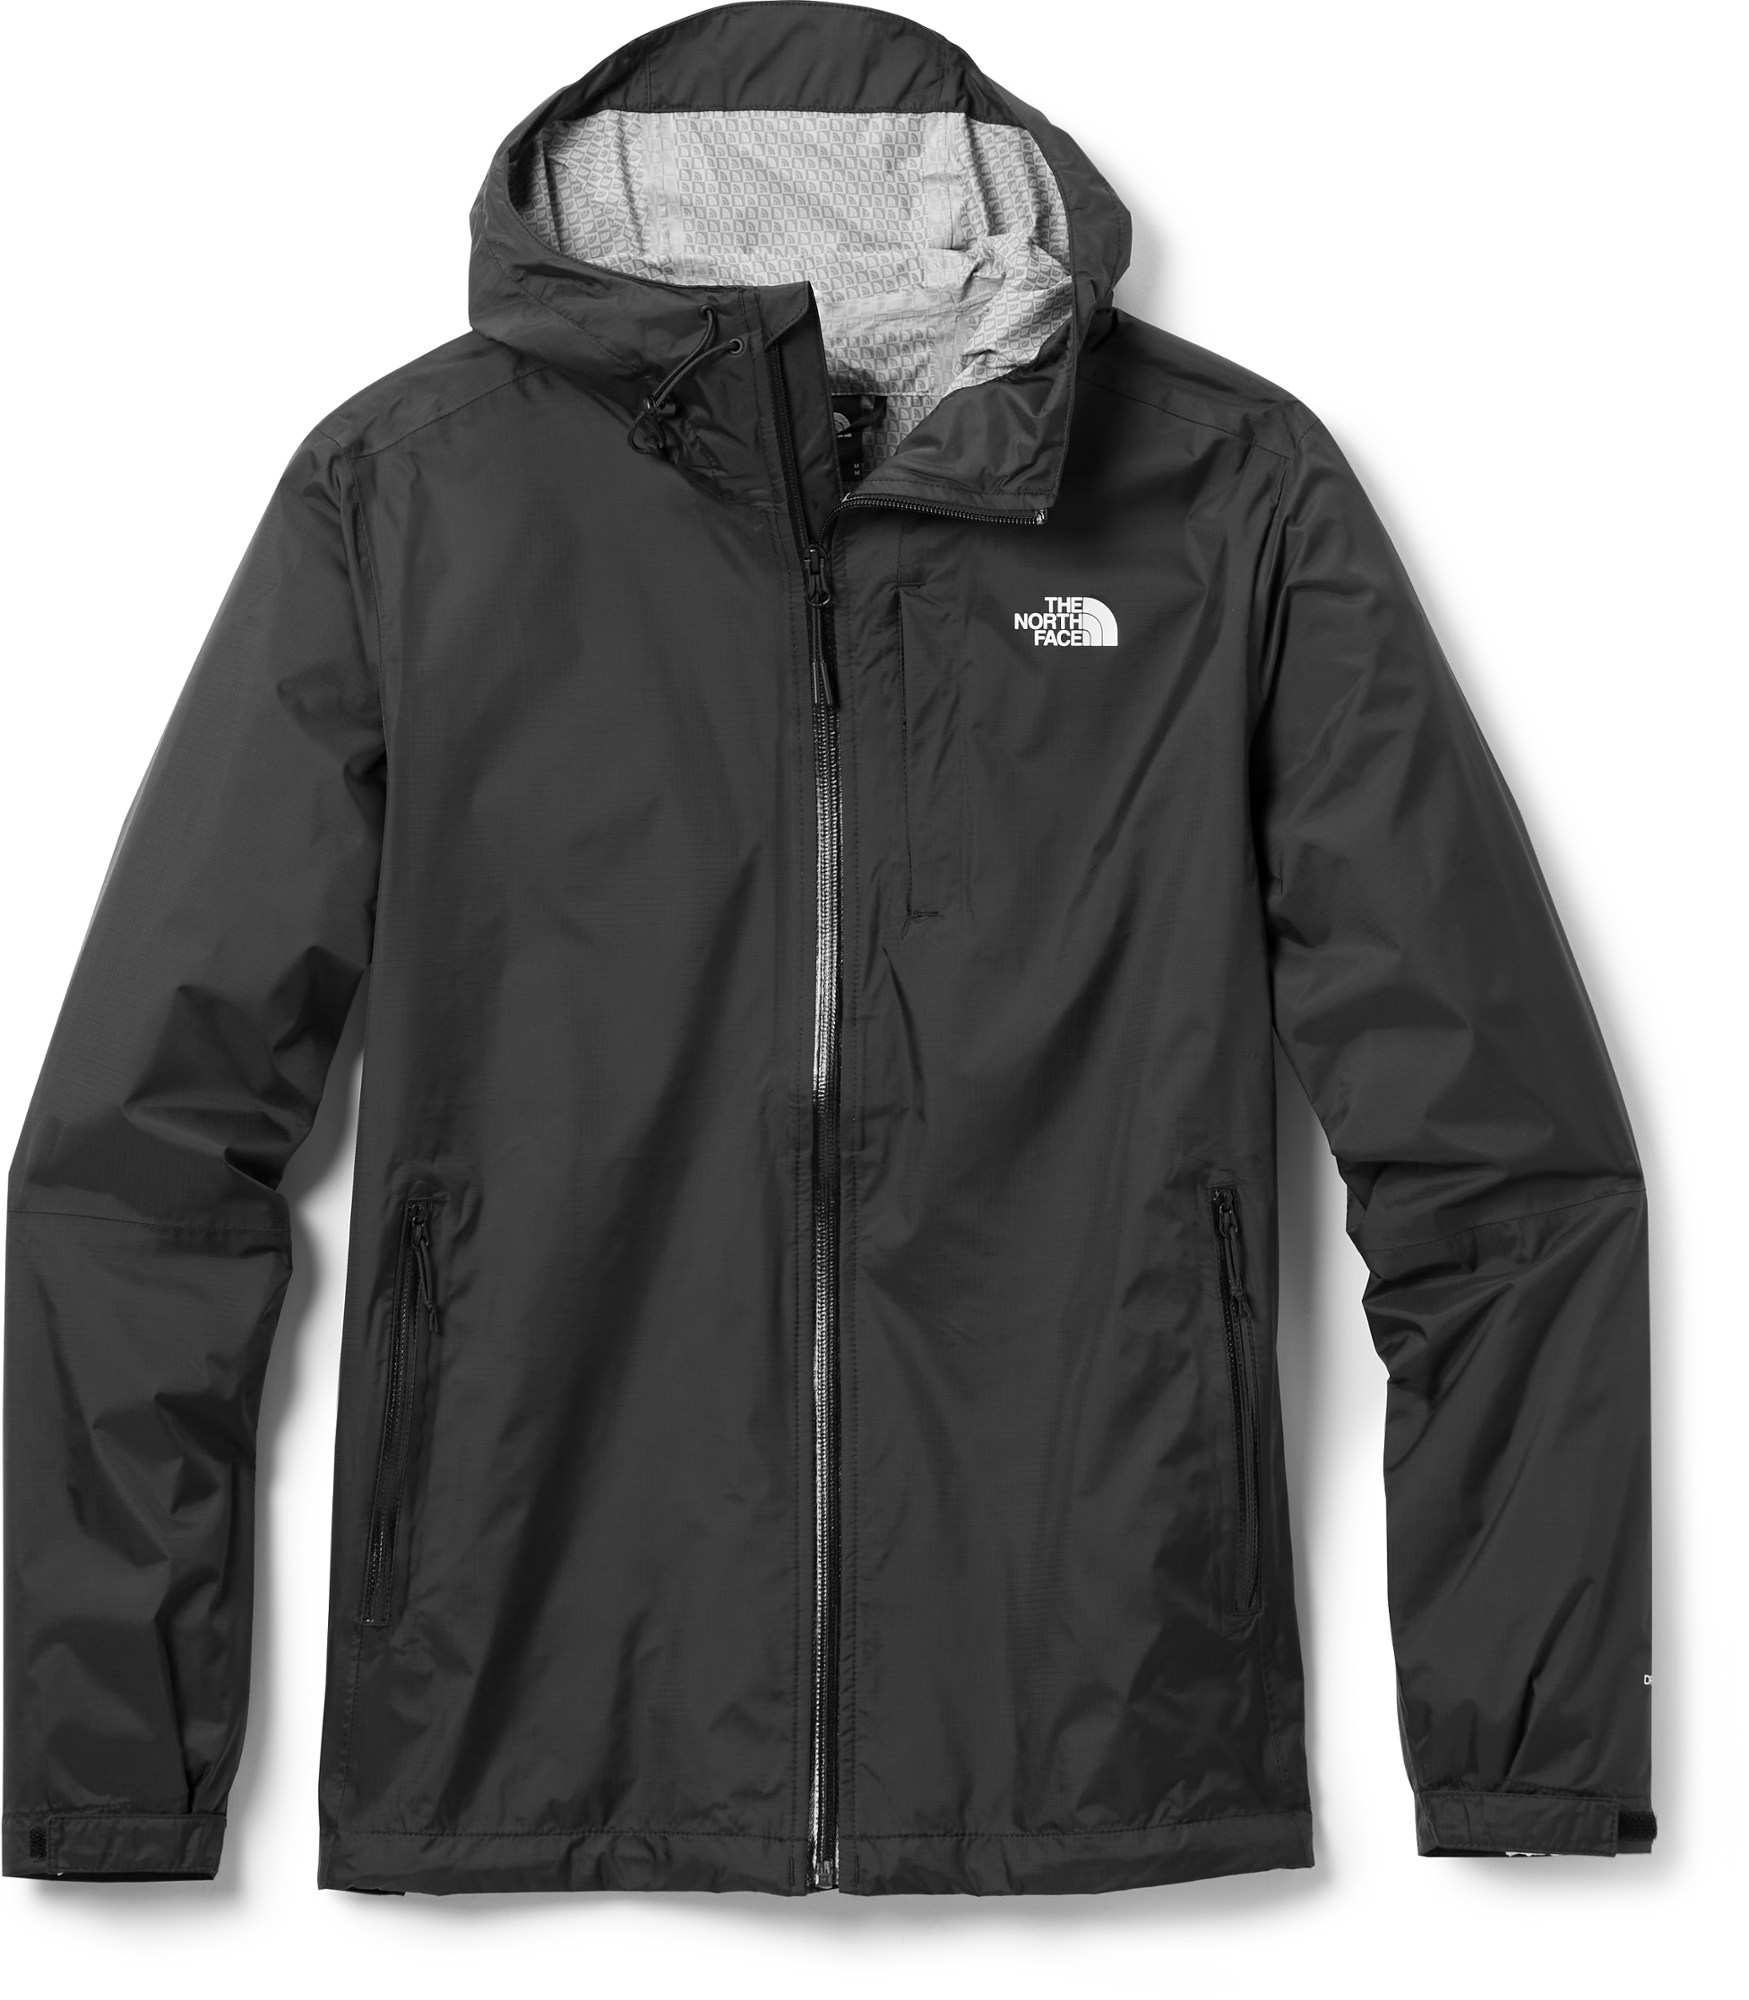 Куртка Alta Vista - Мужская The North Face, черный куртка мужская north желтый неон размер 3xl